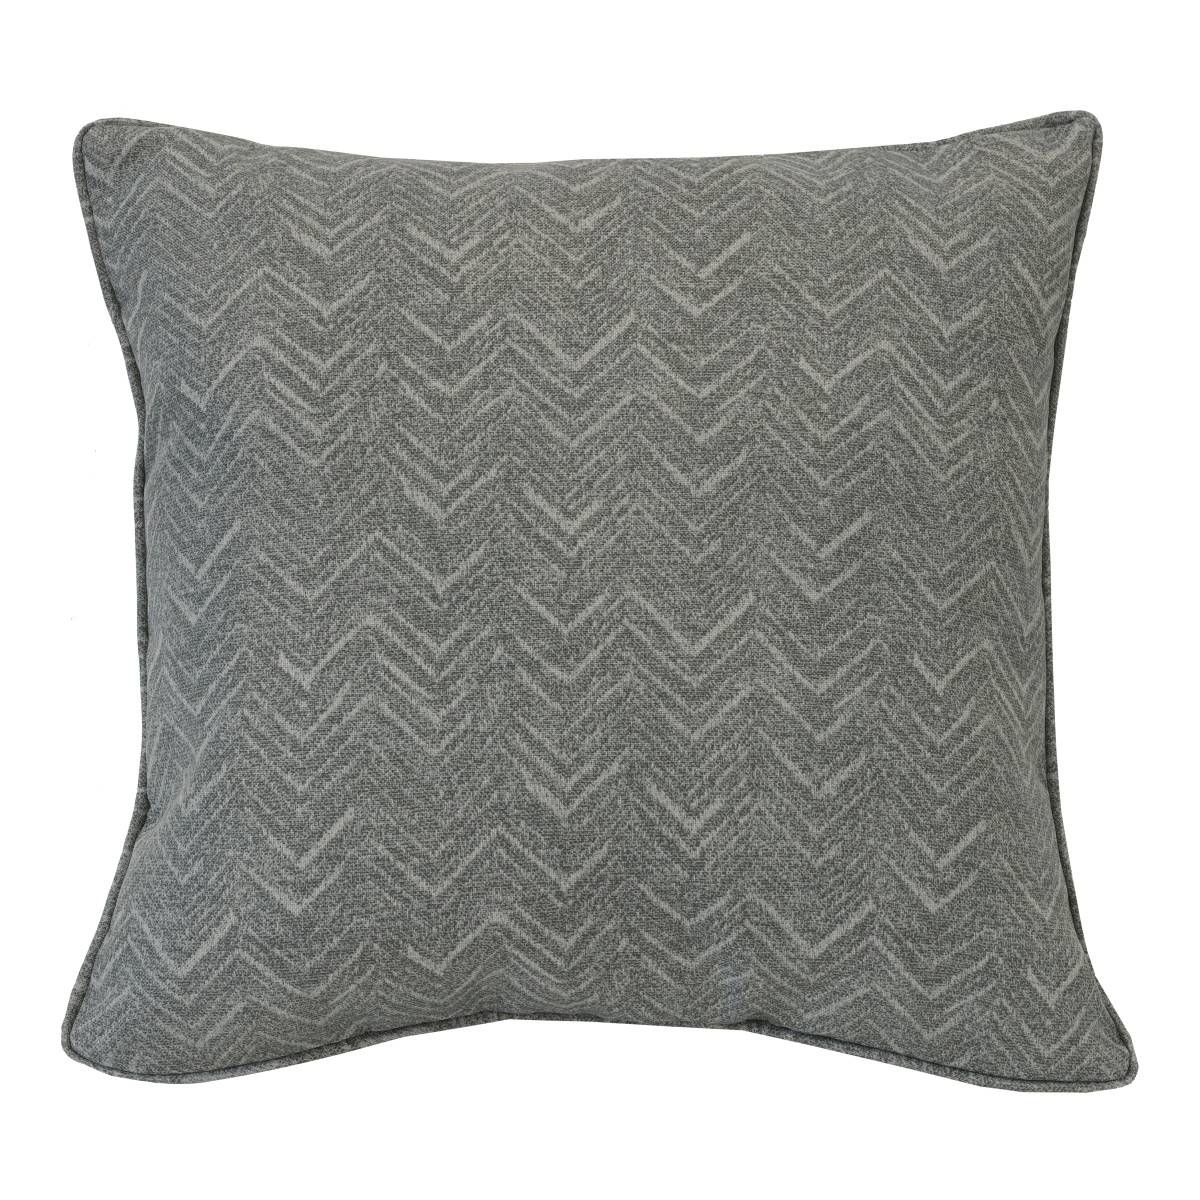 Commonwealth(tm) Fifty Shades Chevron Decorative Pillow - 18x18